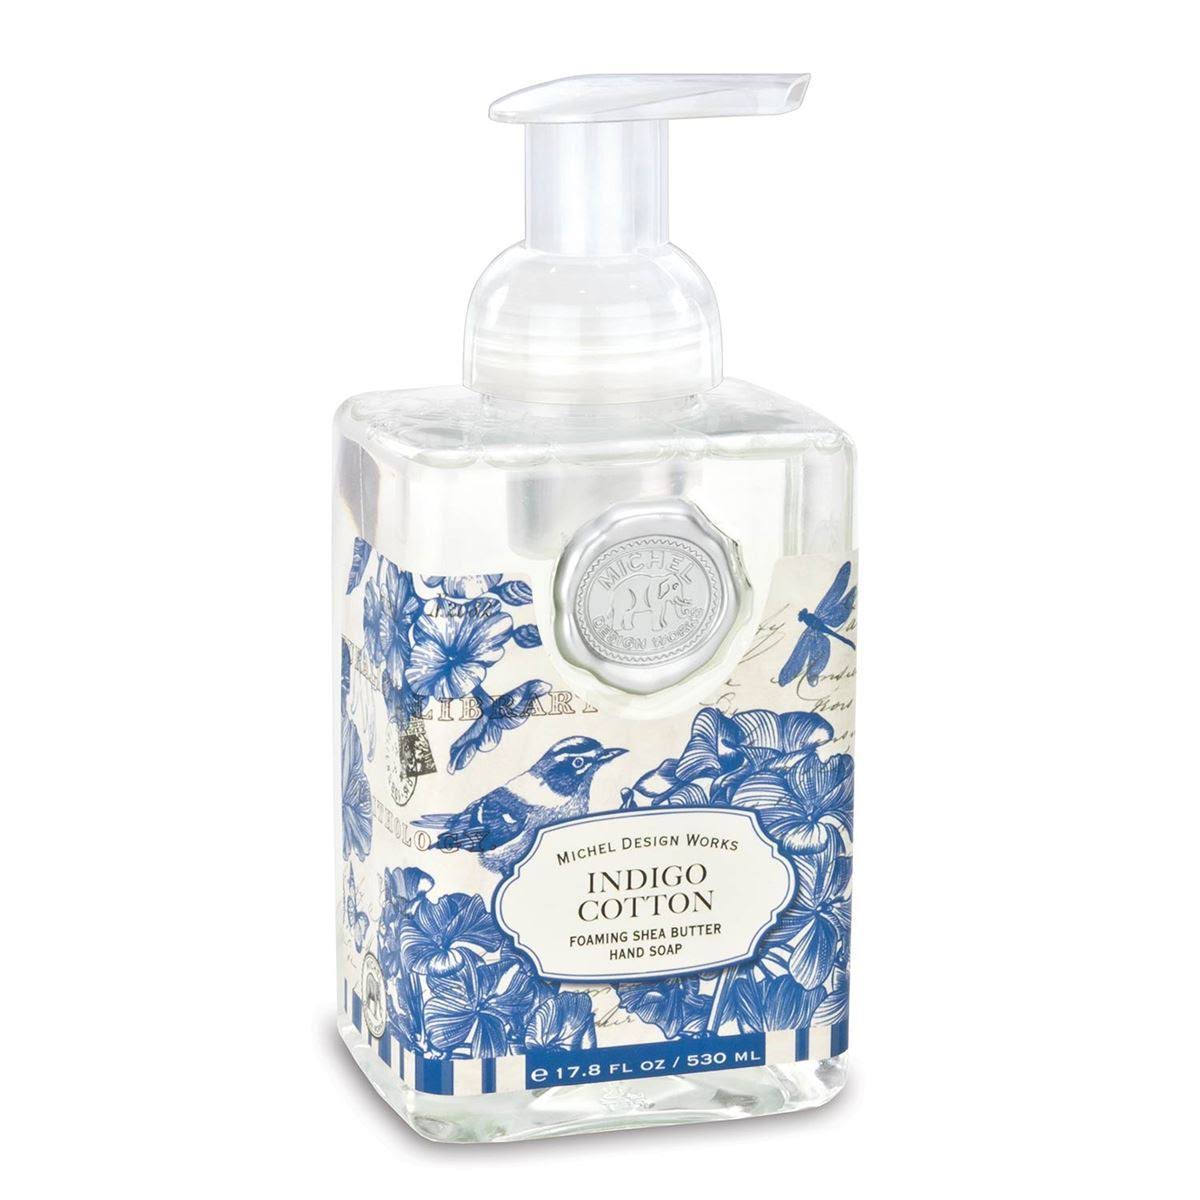 Michel Design Works Foaming Shea Butter Hand Soap, Indigo Cotton - 17.8 oz bottle